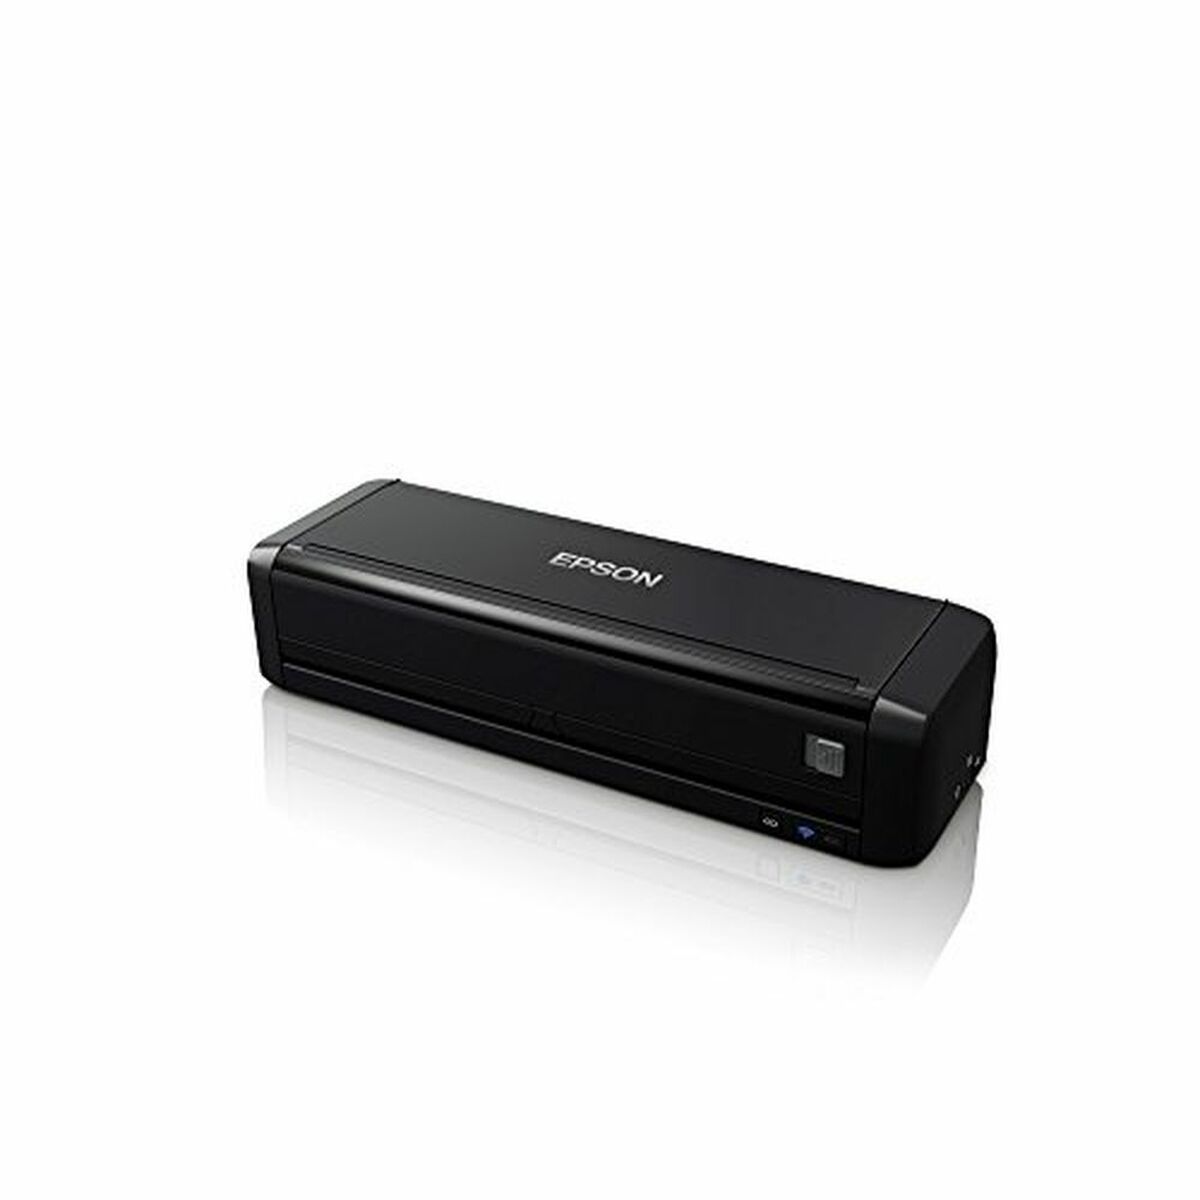 EPSON B11B242401 Scanner Epson DS-360W portabil, A4, baterie inclusa, ADF,600x600dpi, WiFi, USB_1